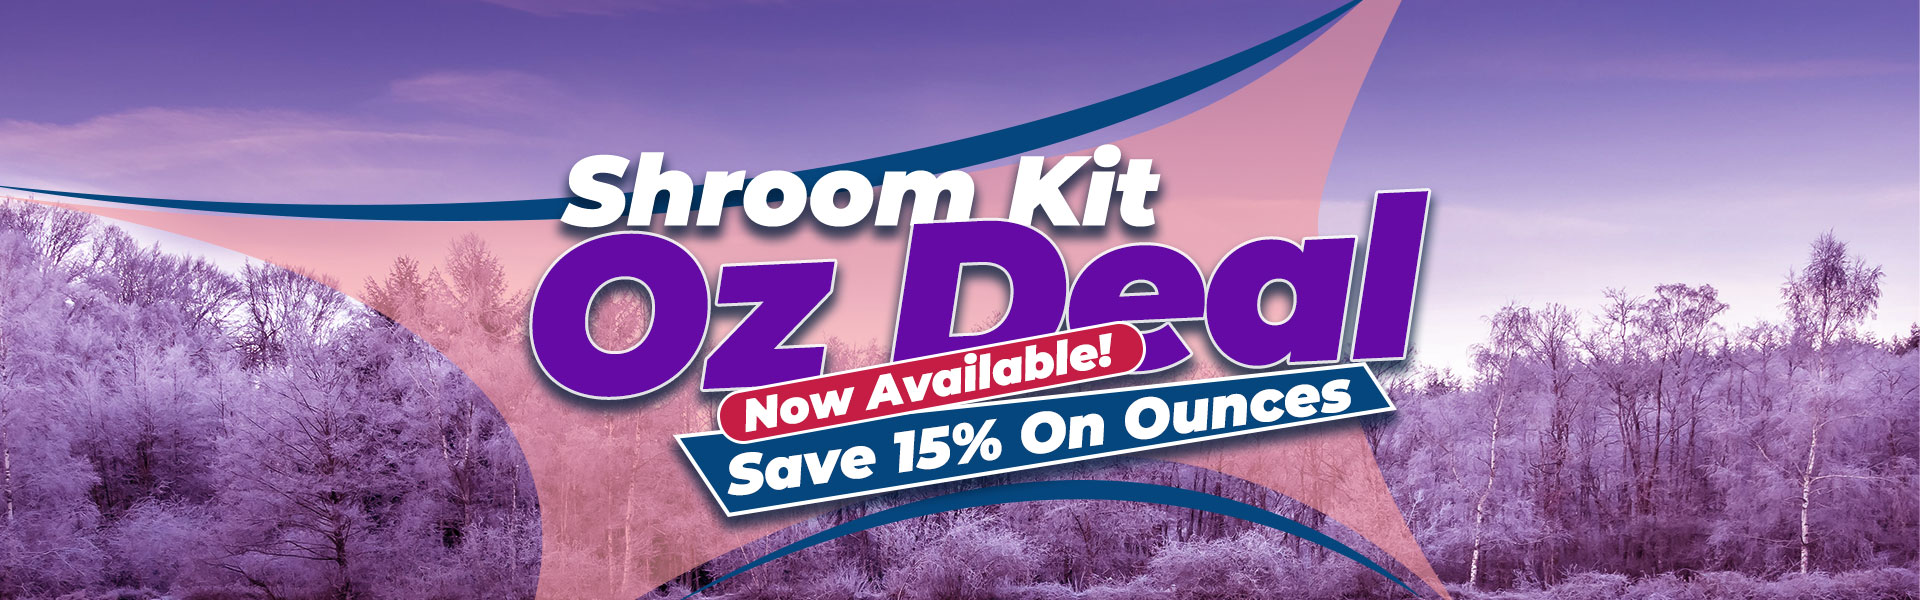 Ps Shroom Kit Oz Deal 1920x600 1